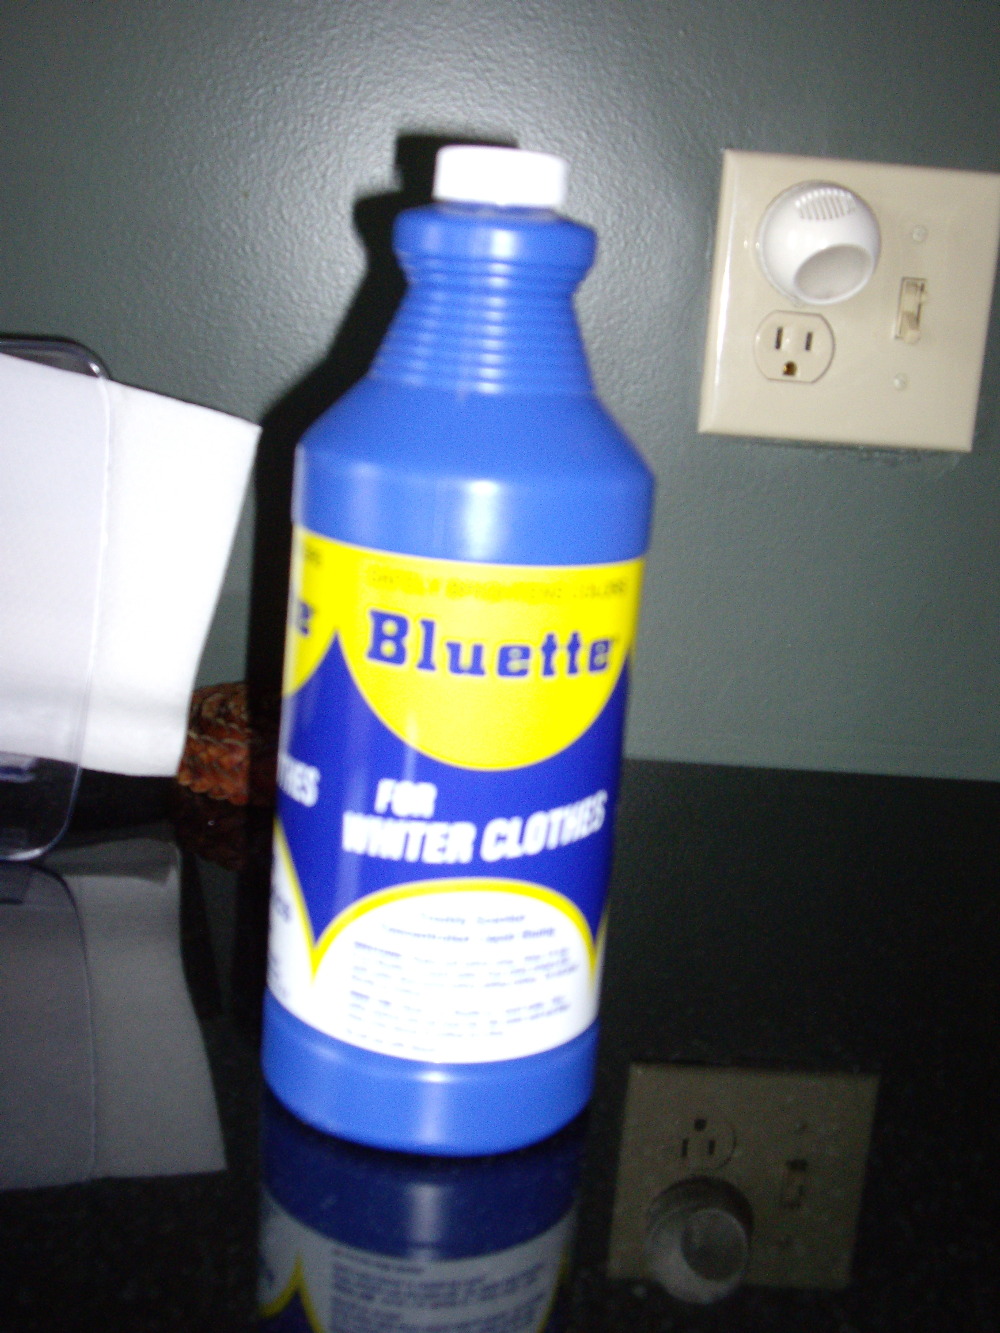 Bluing Liquid Mrs. Stewart Vintage Bottle Laundry Additive Almost